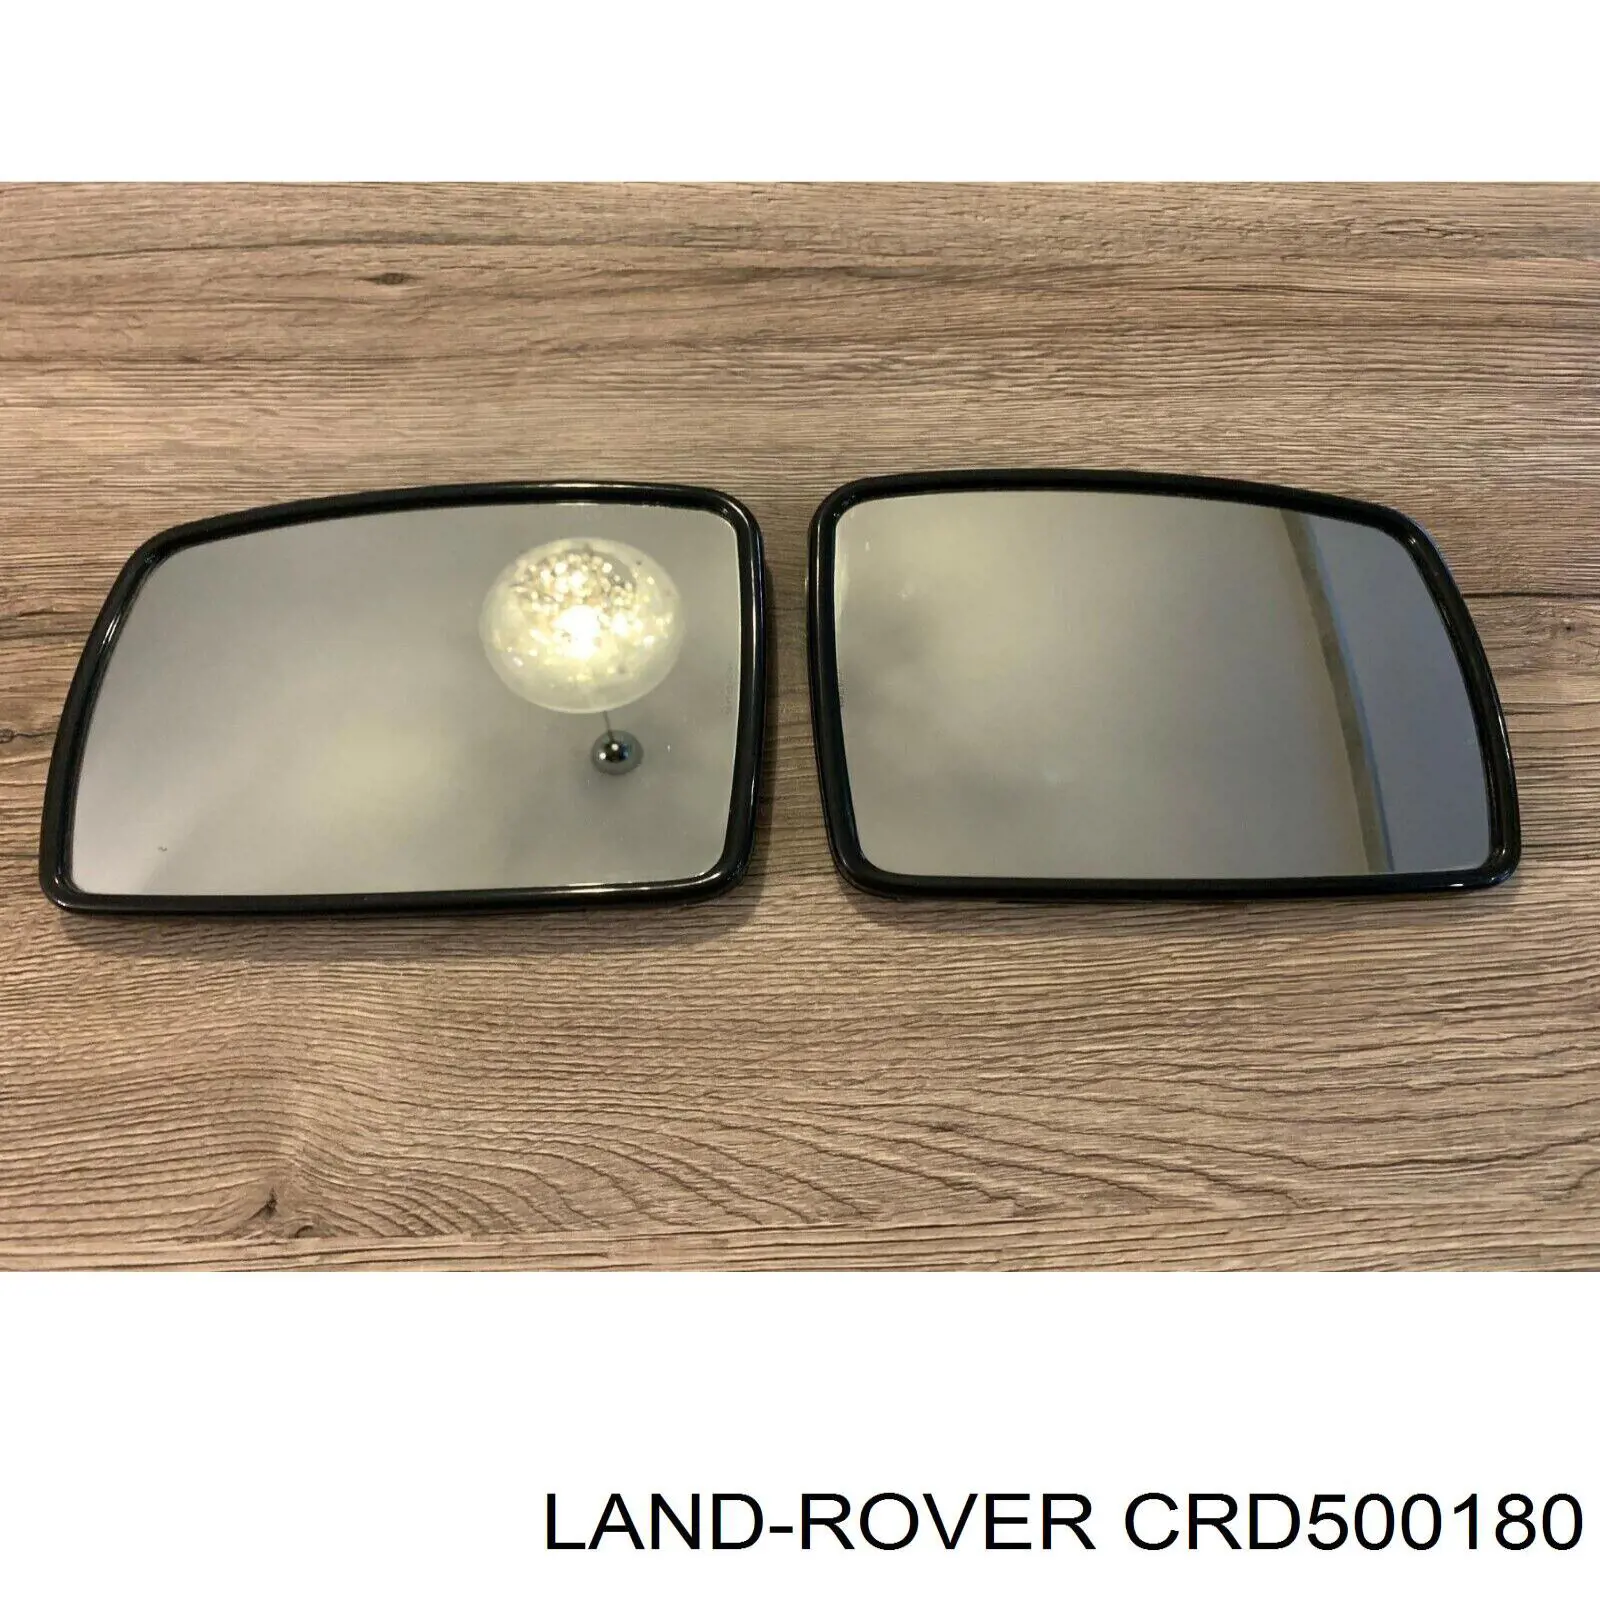 CRD500180 Land Rover cristal de espejo retrovisor exterior derecho